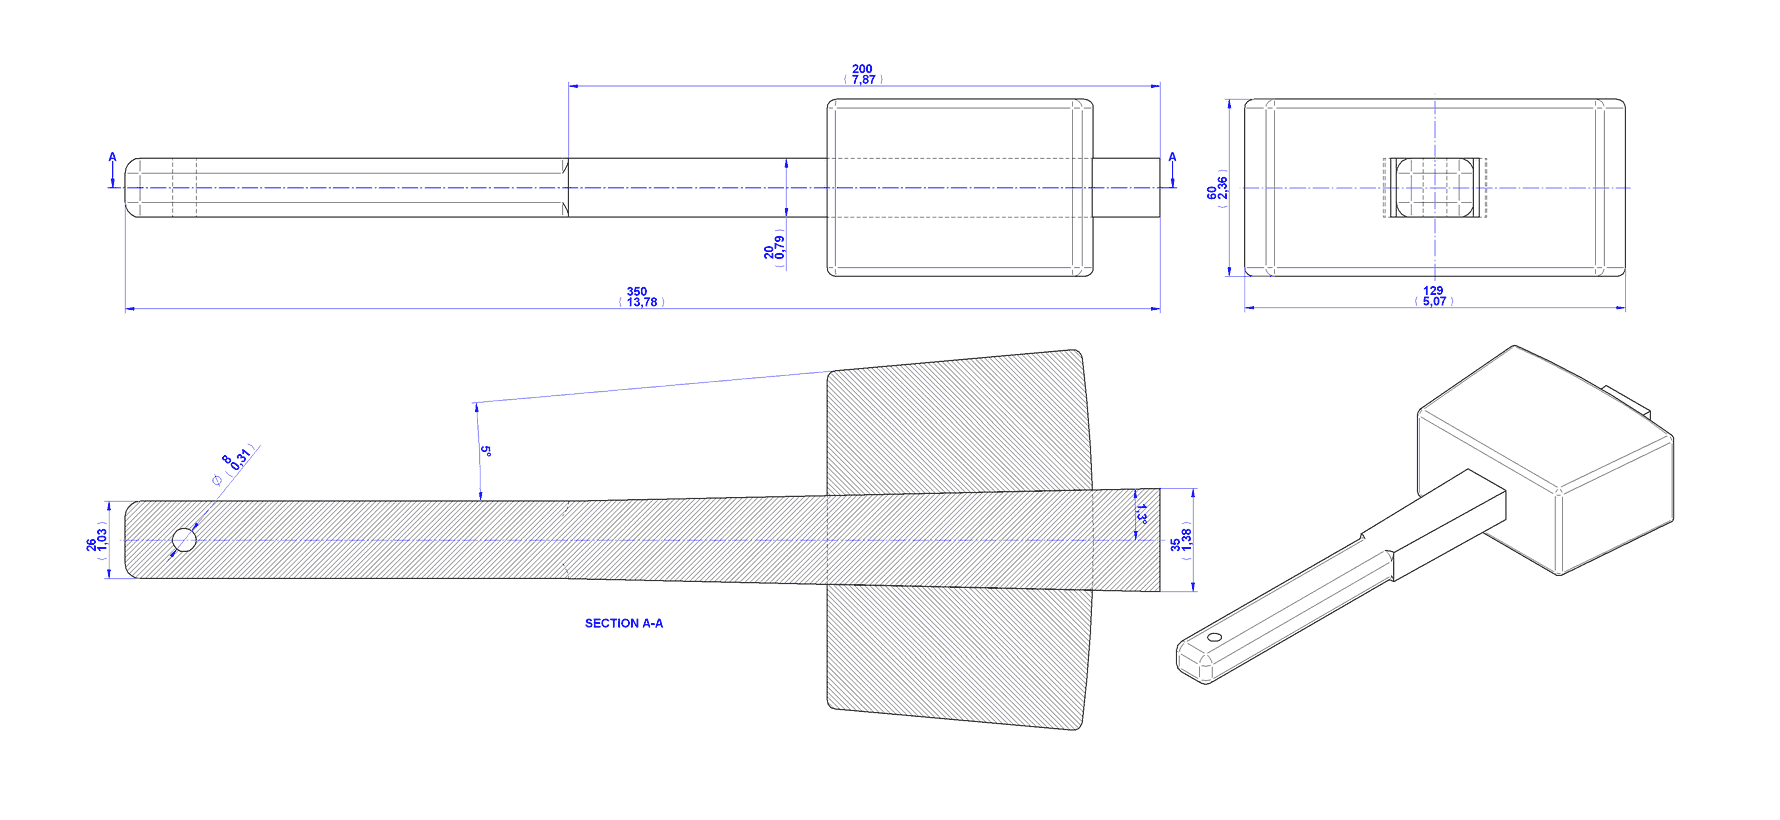 download complete plan wooden mallet plan pdf pages 6 510kb